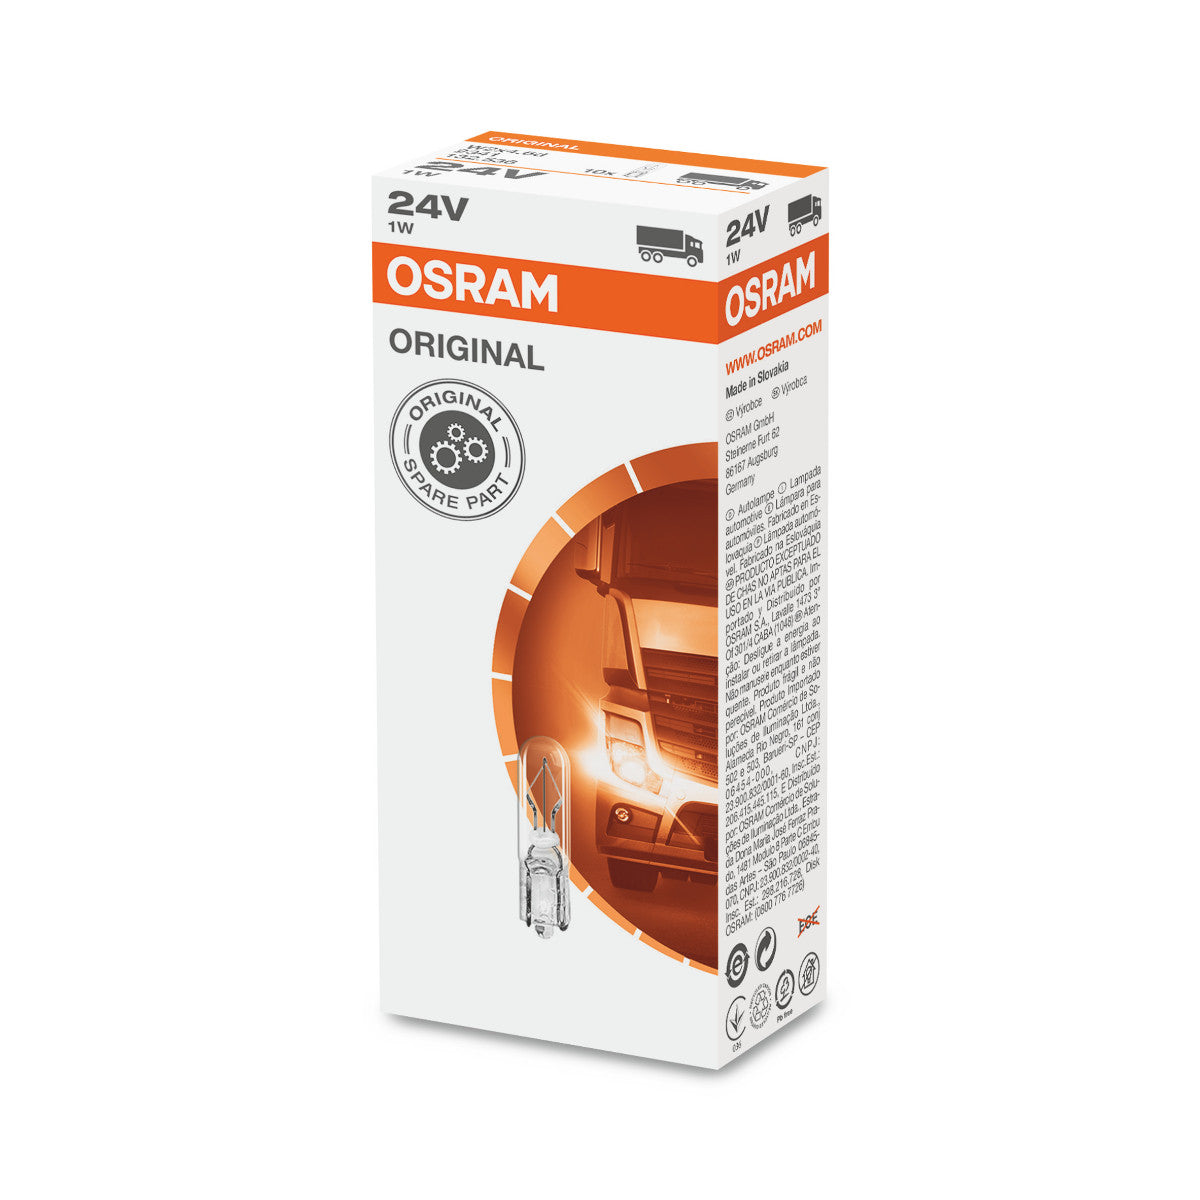 OSRAM ORIGINAL - WEDGE BASE - 1W - 24V - Extraljuslampa